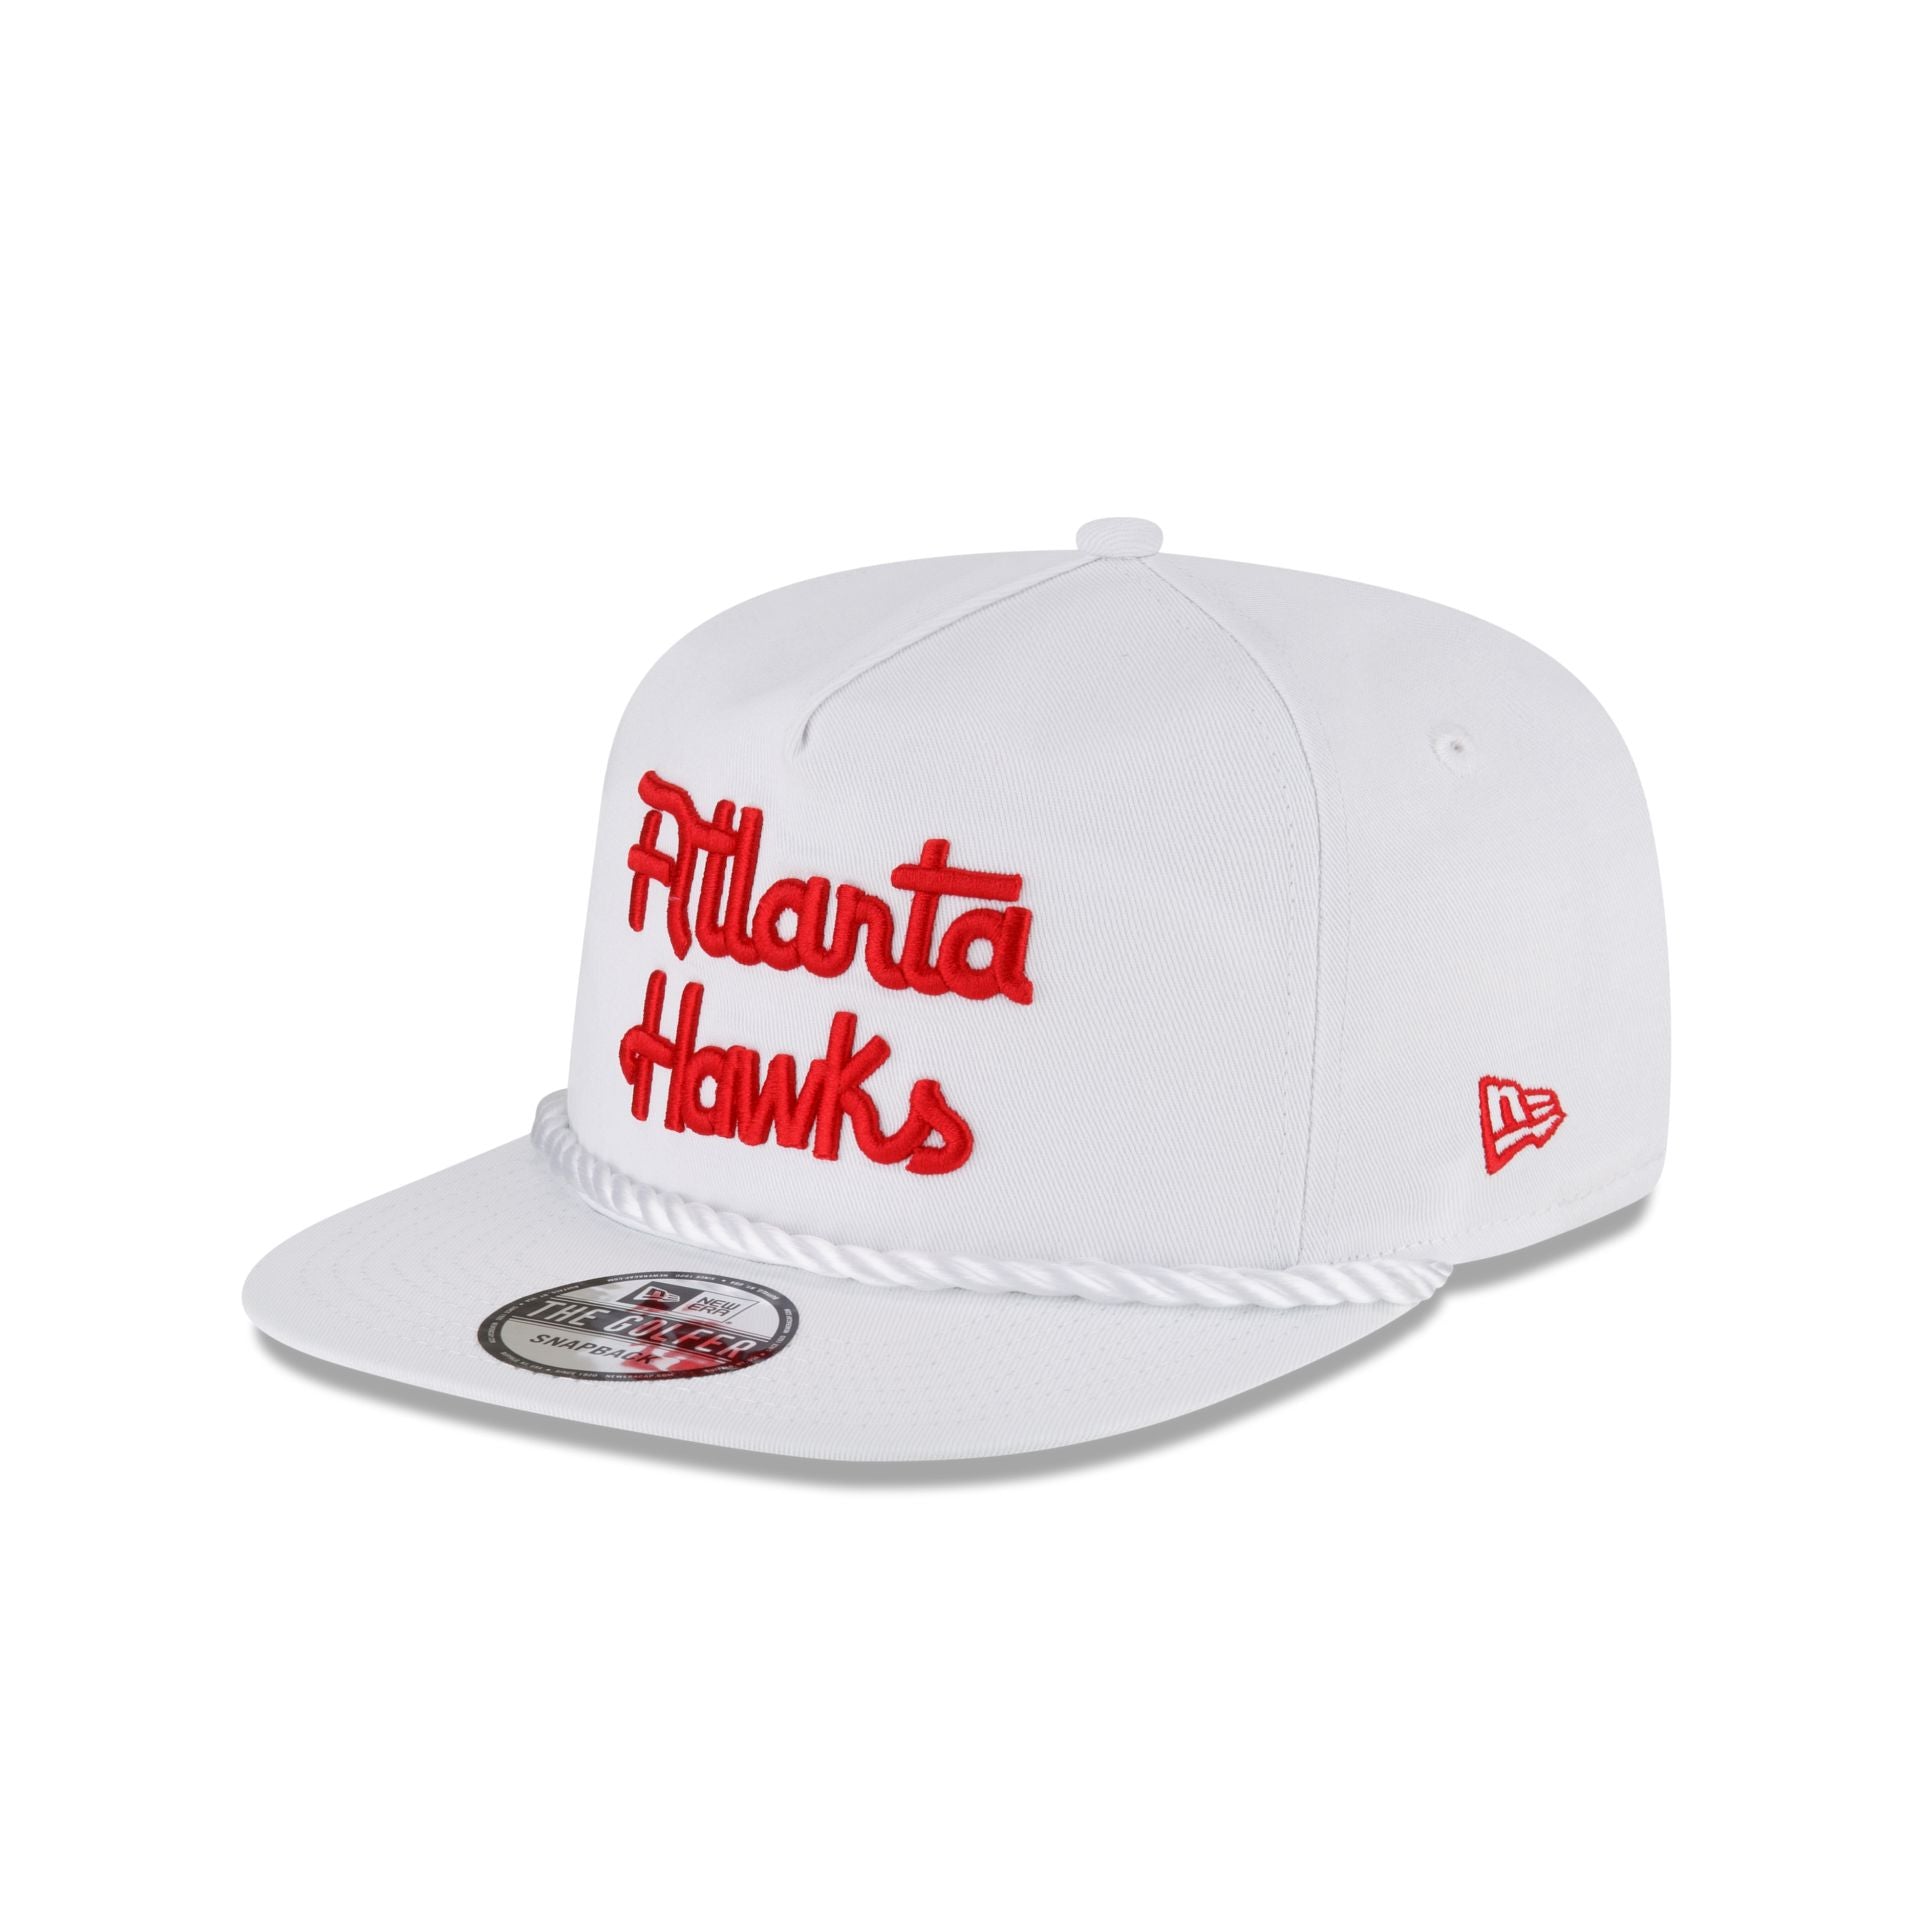 Men's Atlanta Hawks New Era Black On Black 9FIFTY Snapback Hat